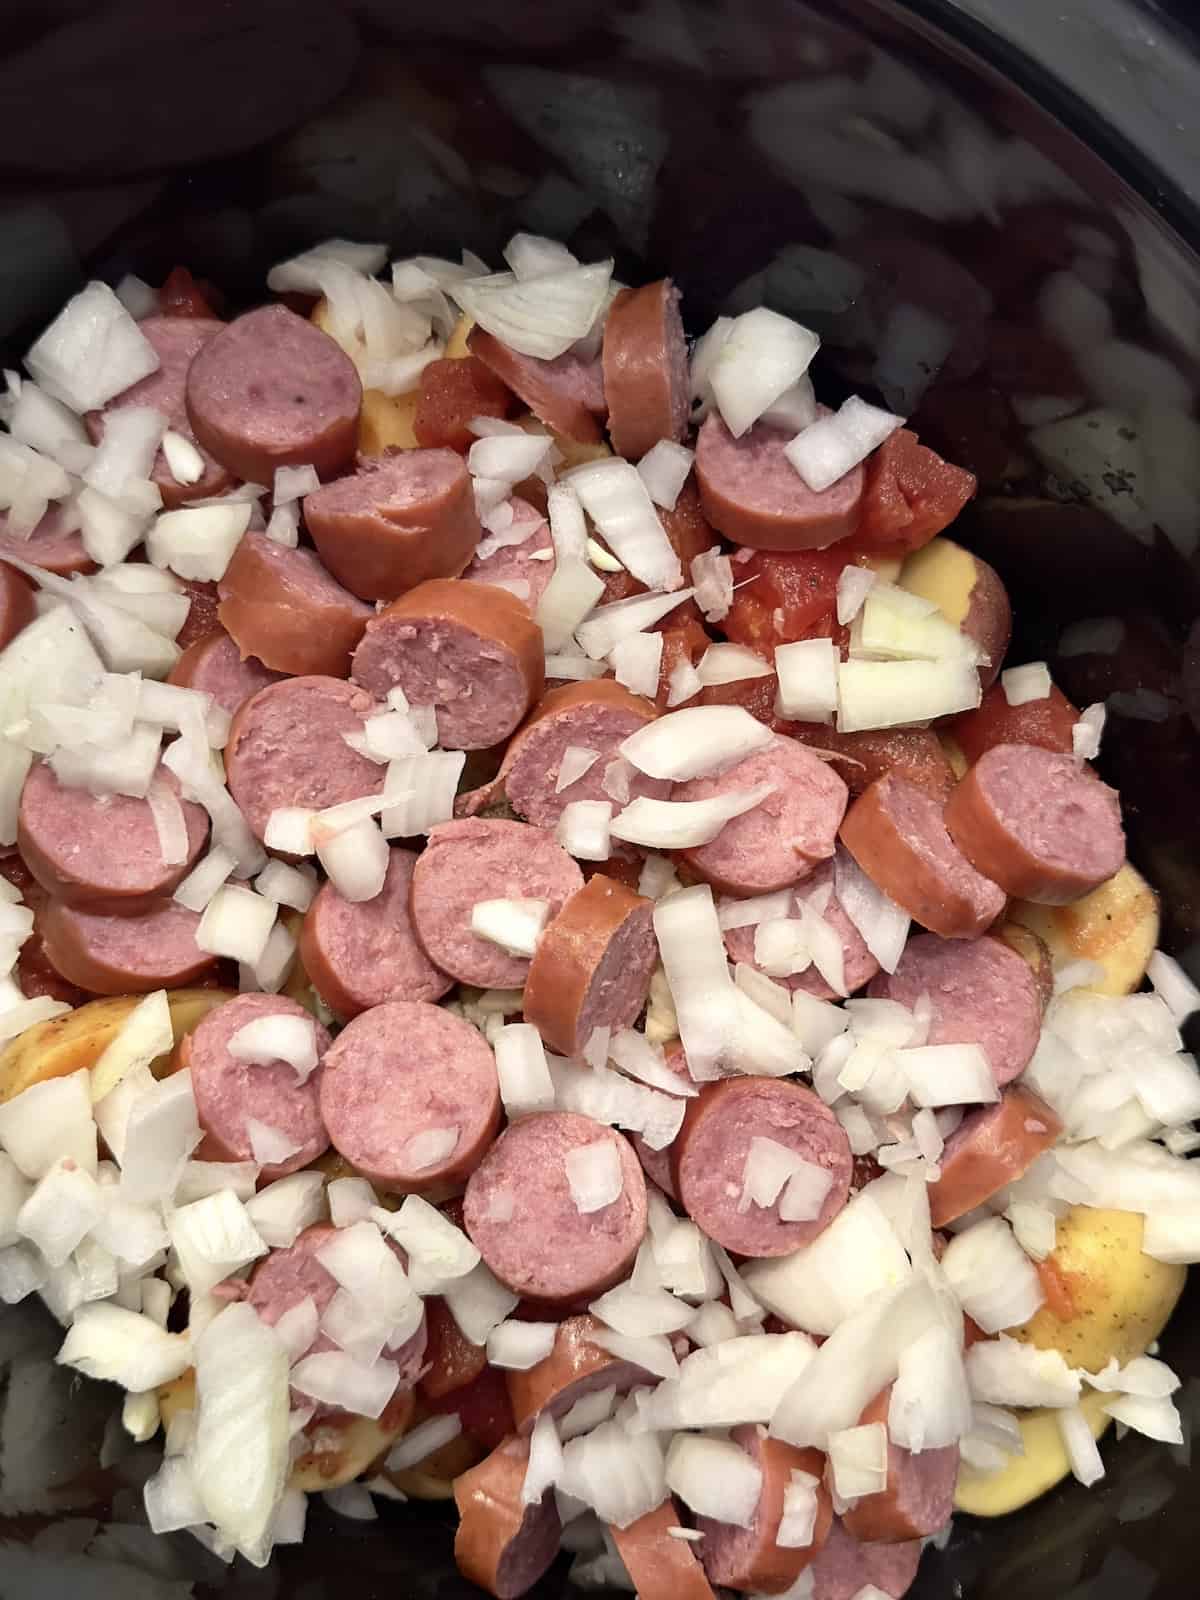 kielbasa, tomatoes, onions, garlic and seasonings in a crockpot